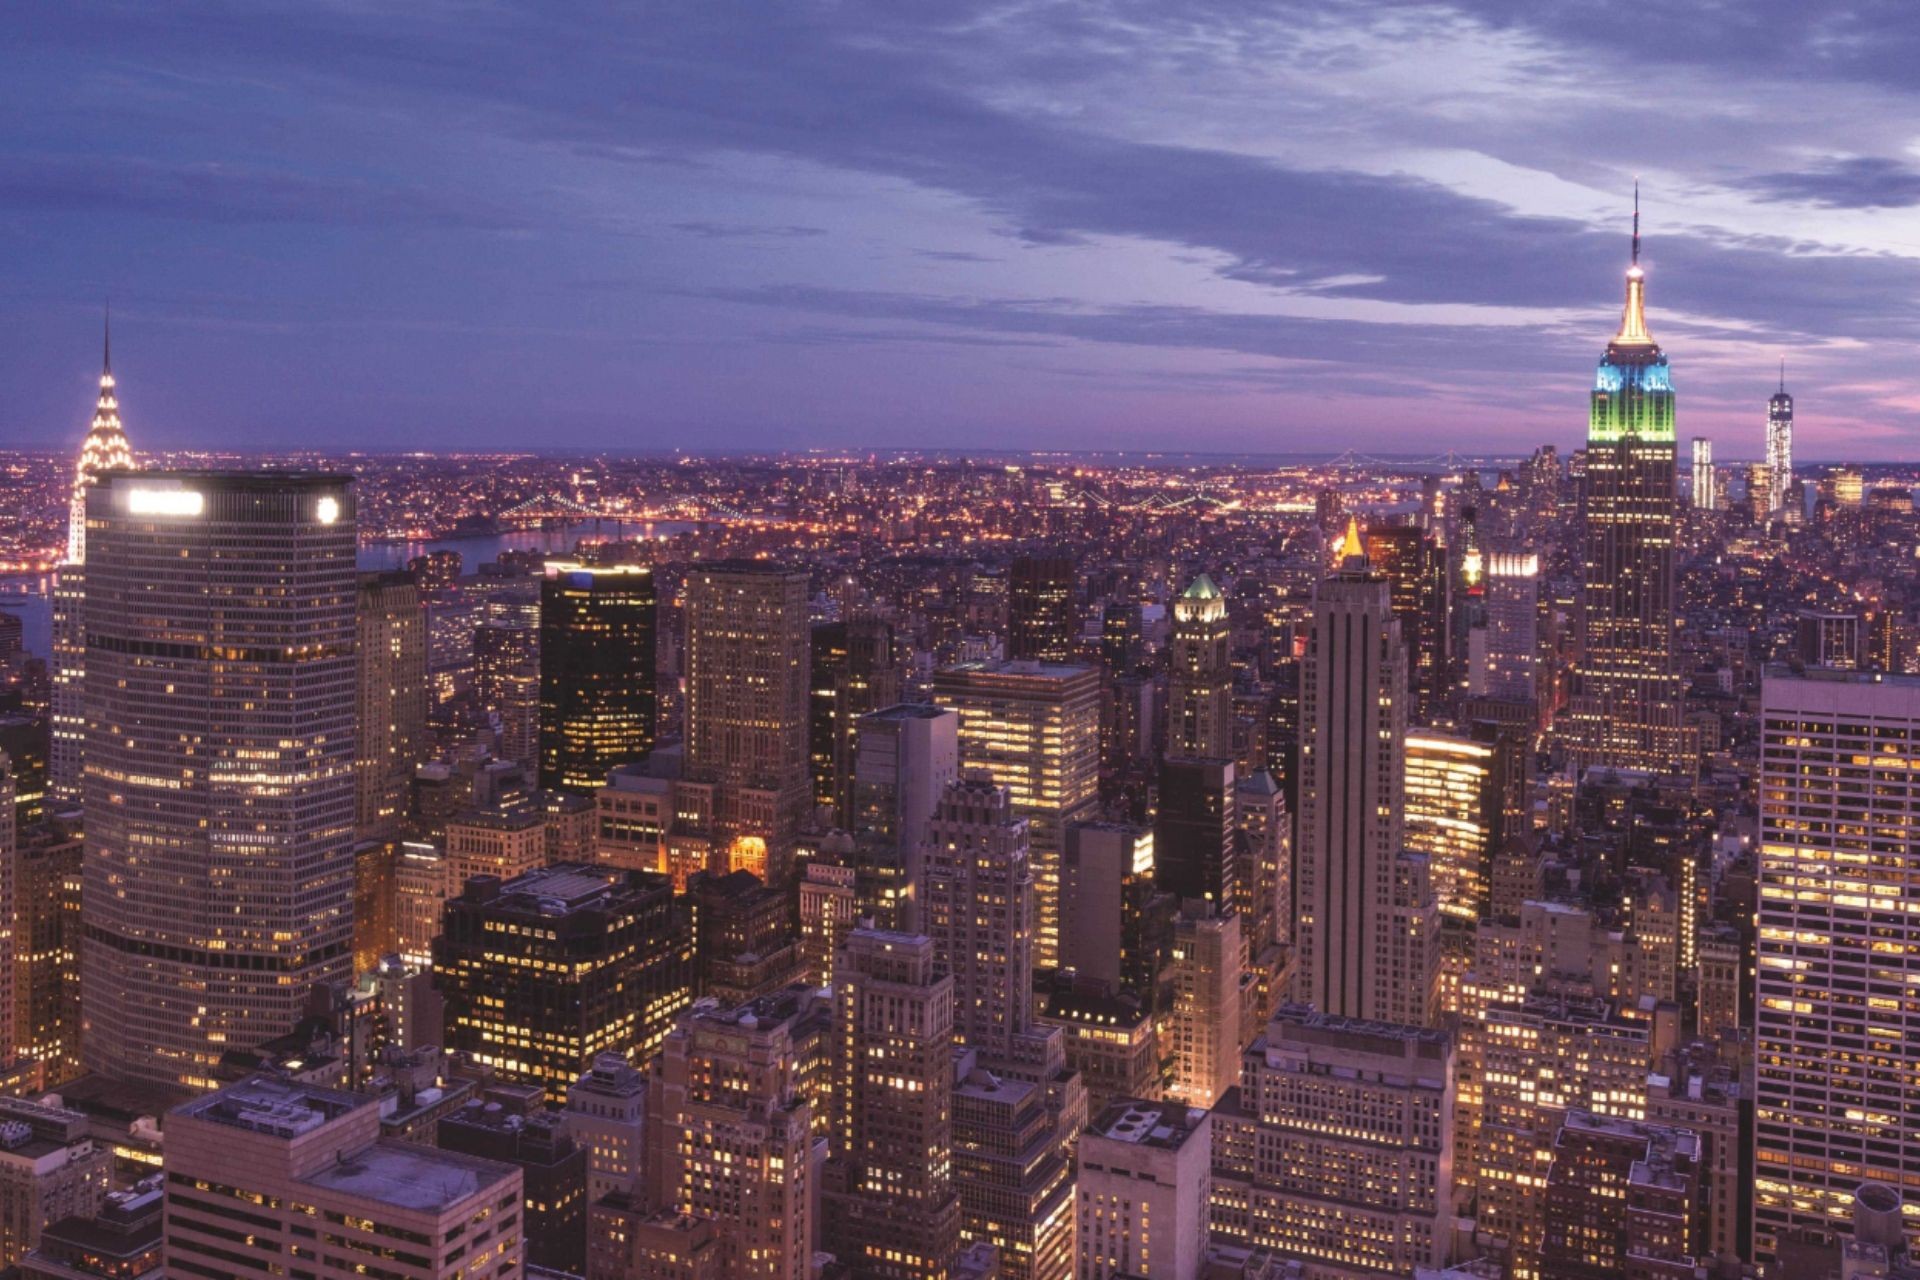 NYC nighttime aerial